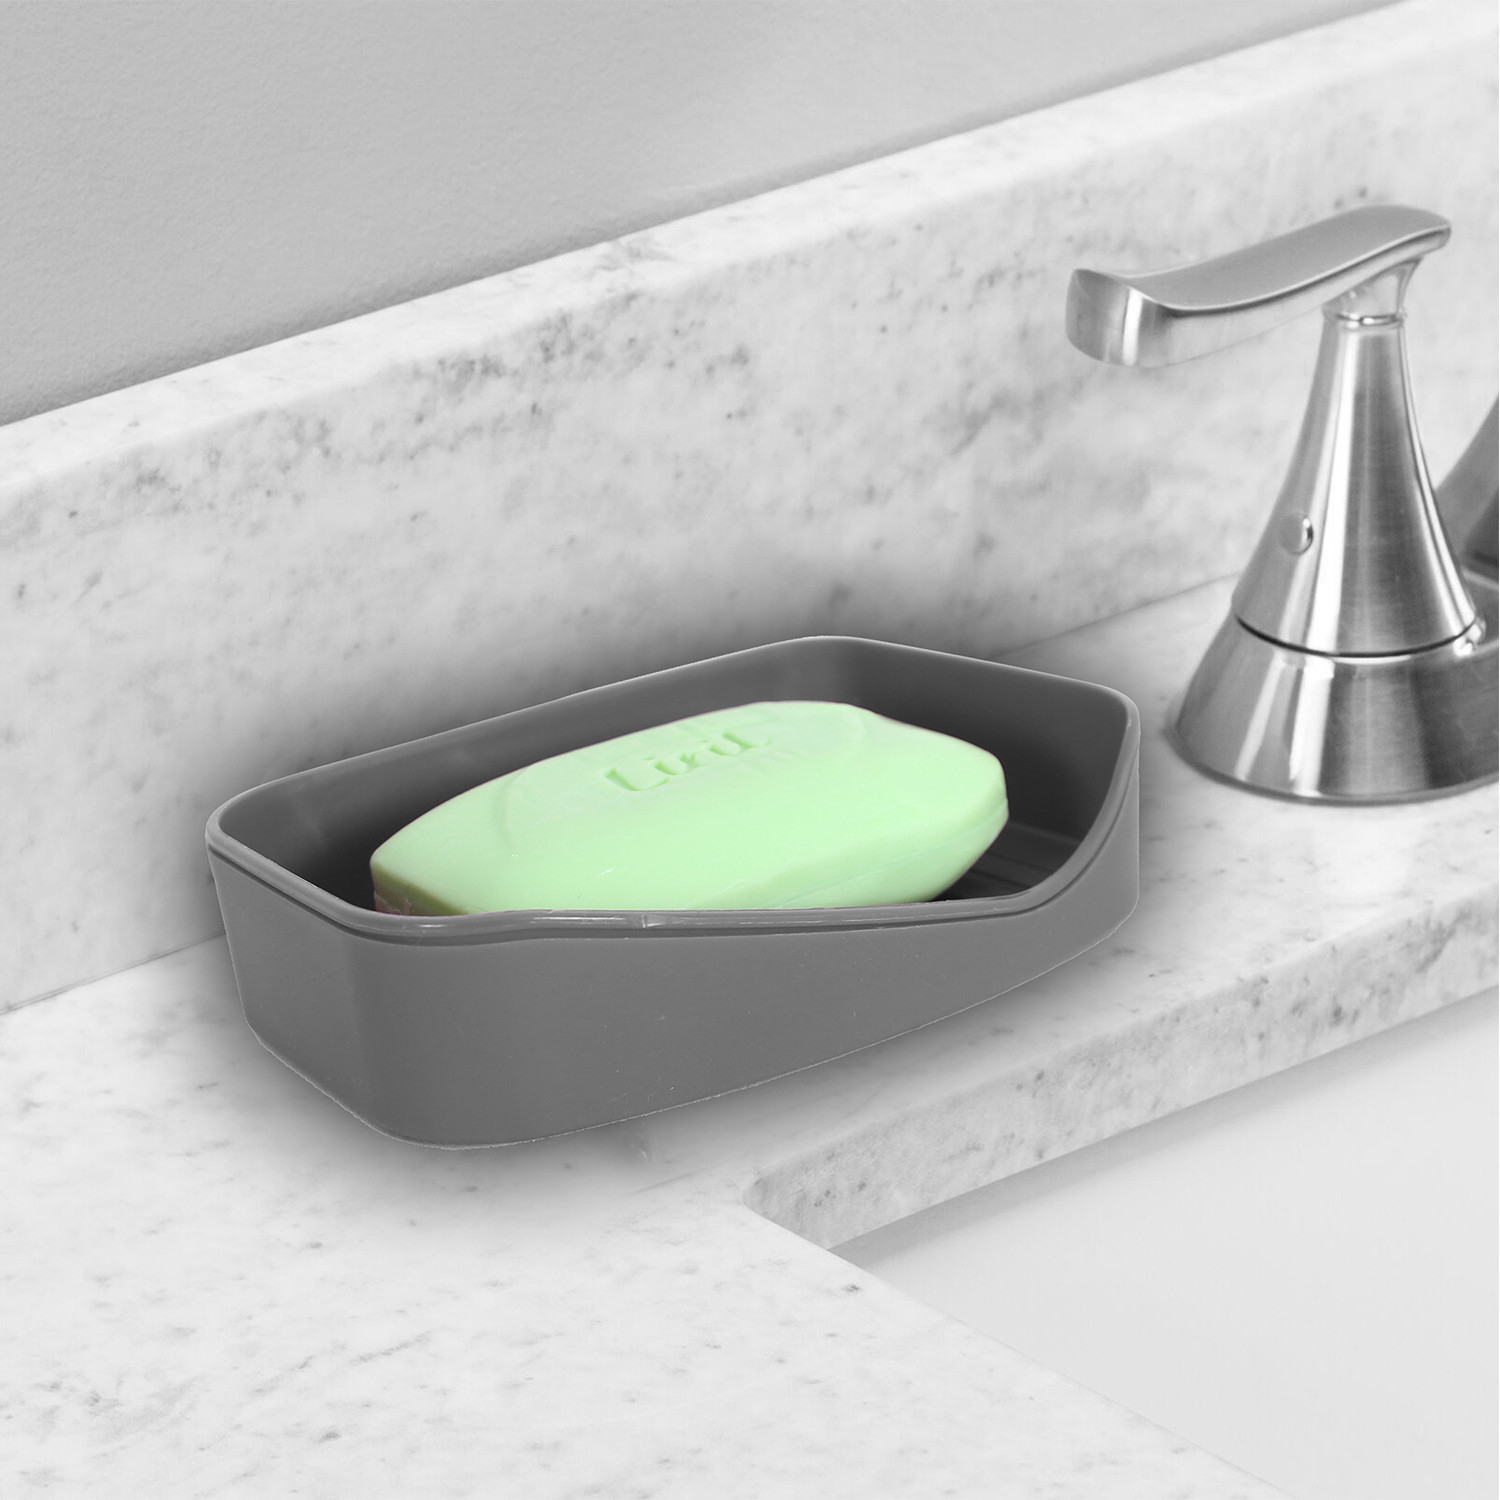 Kuber Industries Saop Holder For Kitchen Sink|Portable Plastic Double Desk Self Draining Soap Holder|Soap Holder For Kitchen Bathroom,Wash Basin| (Gray)